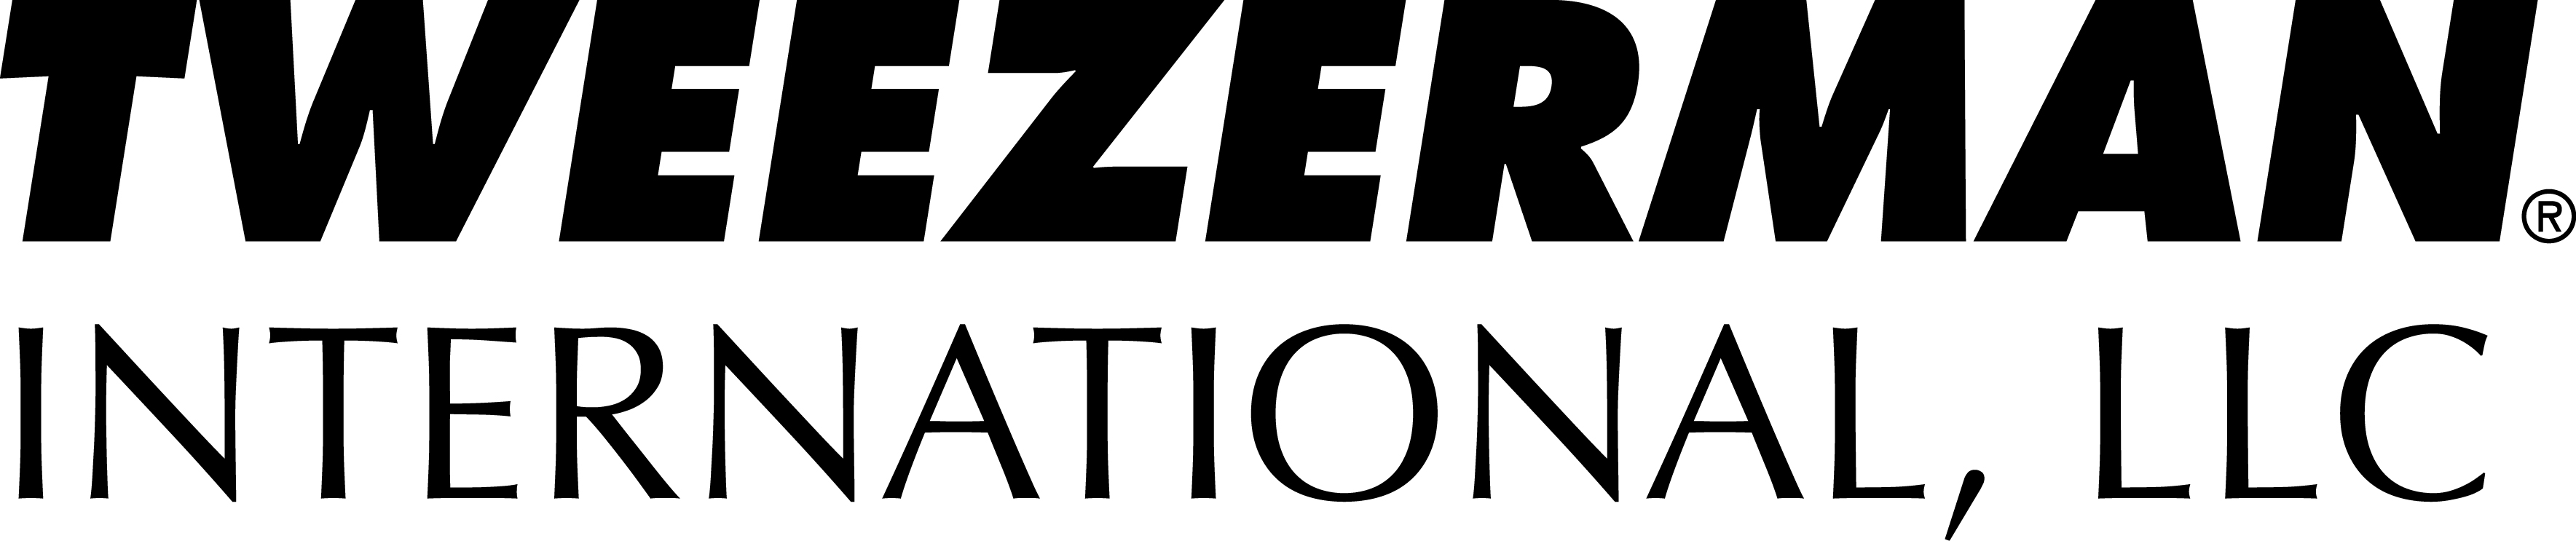 Tweezerman International logo